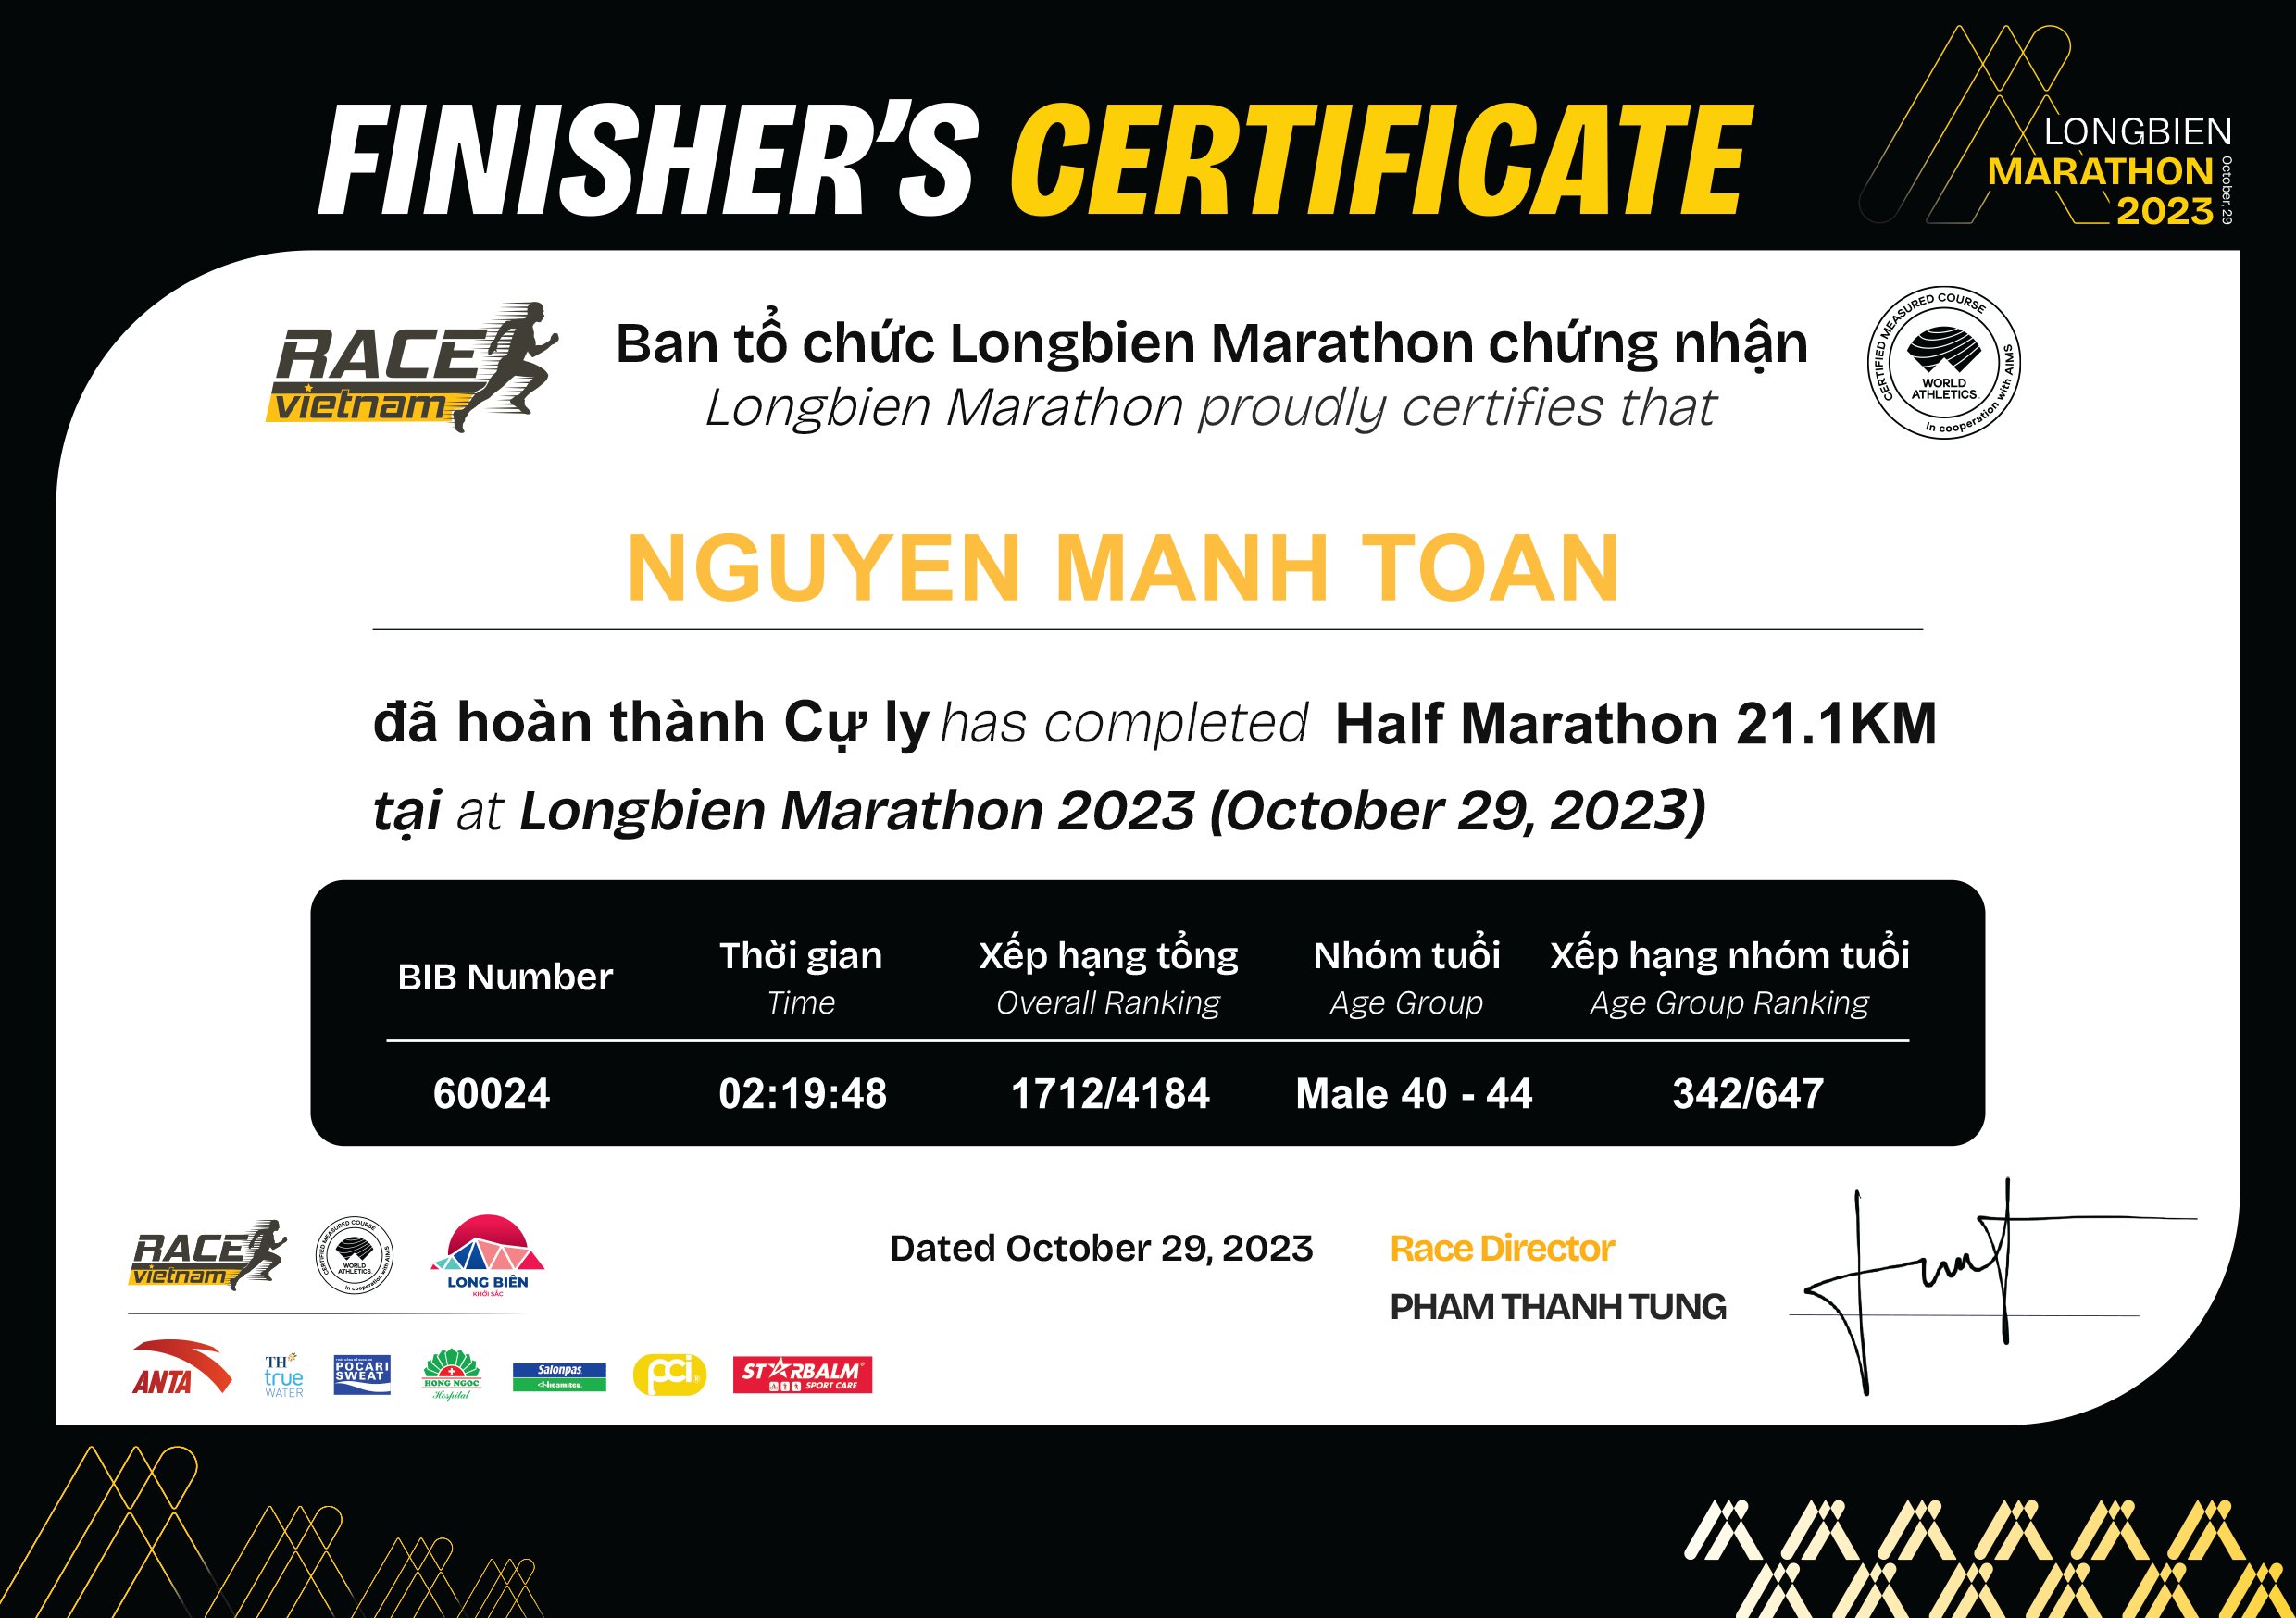 60024 - Nguyen Manh Toan